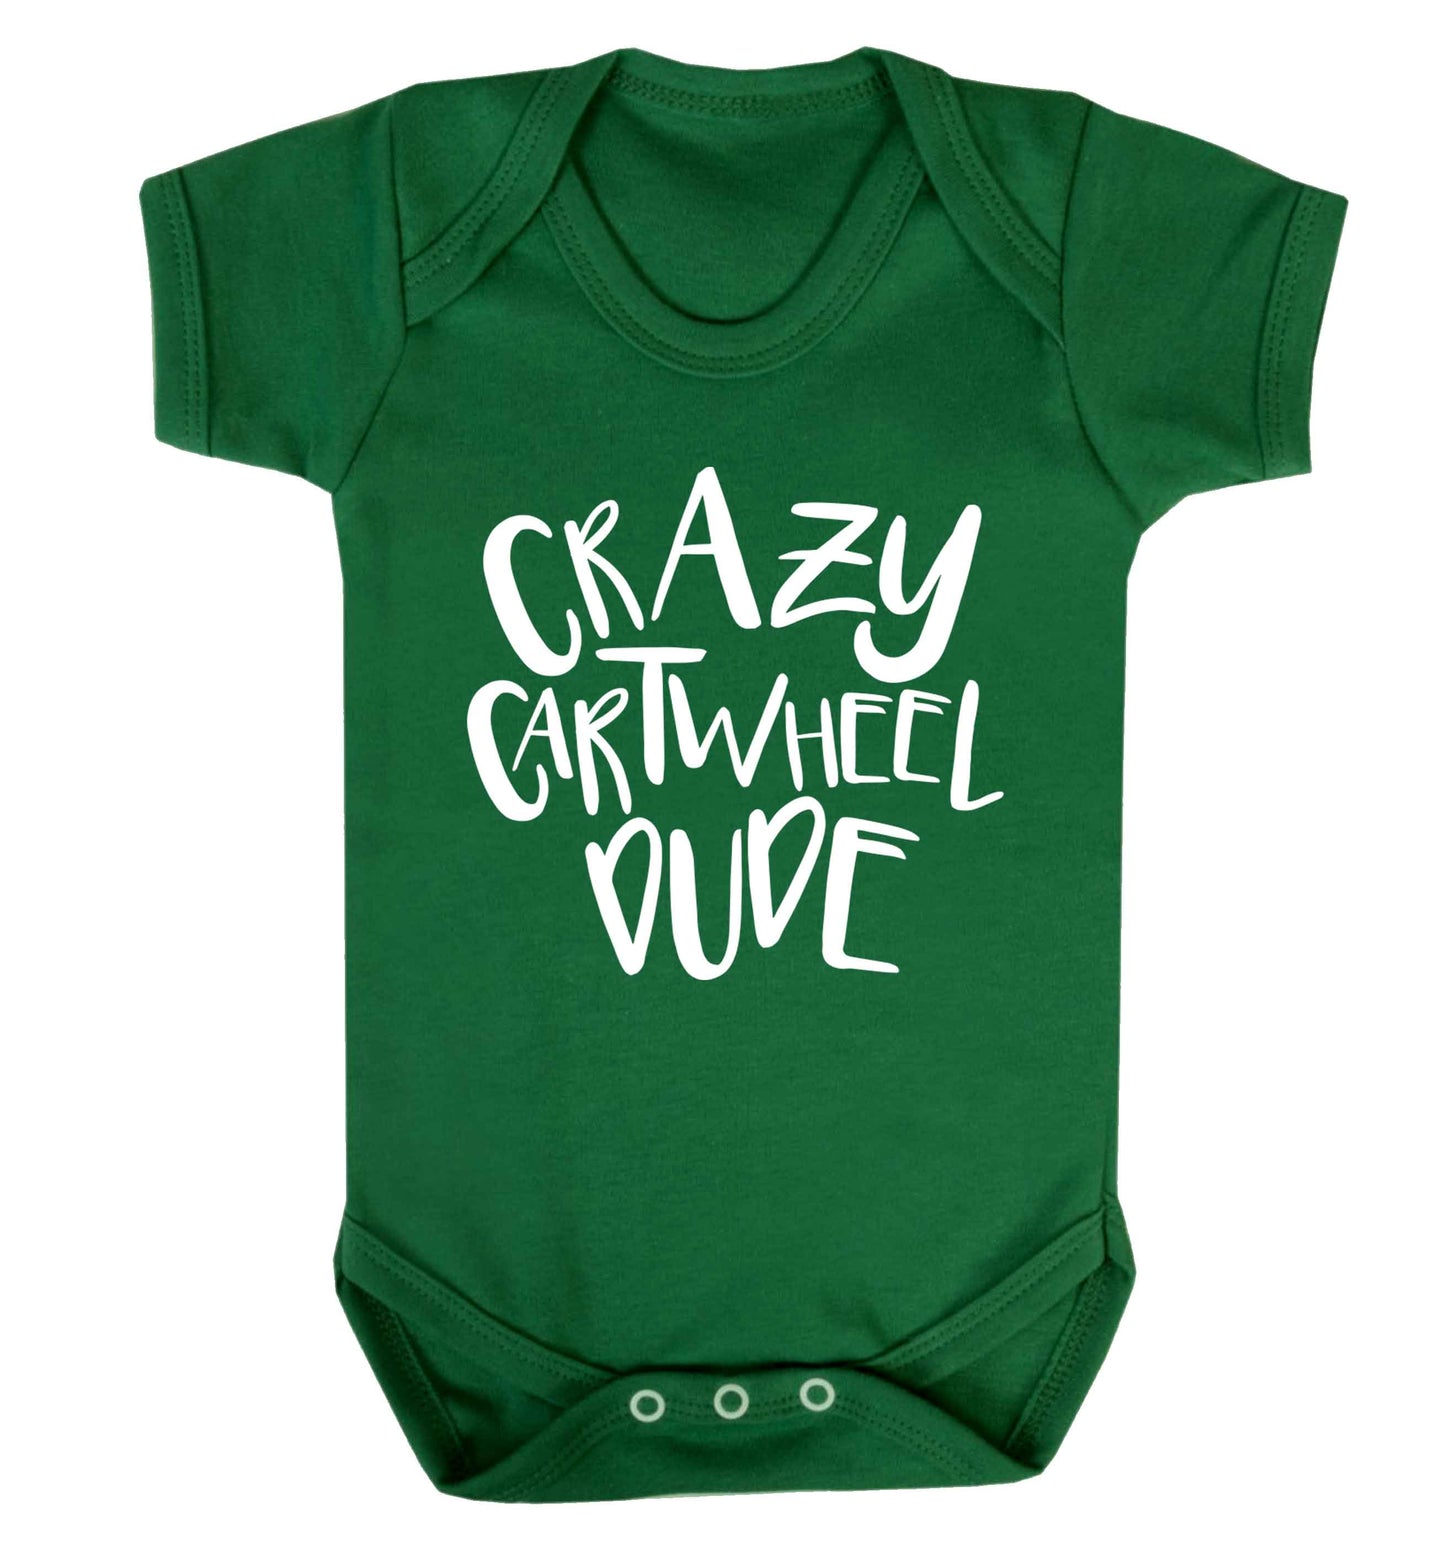 Crazy cartwheel dude Baby Vest green 18-24 months